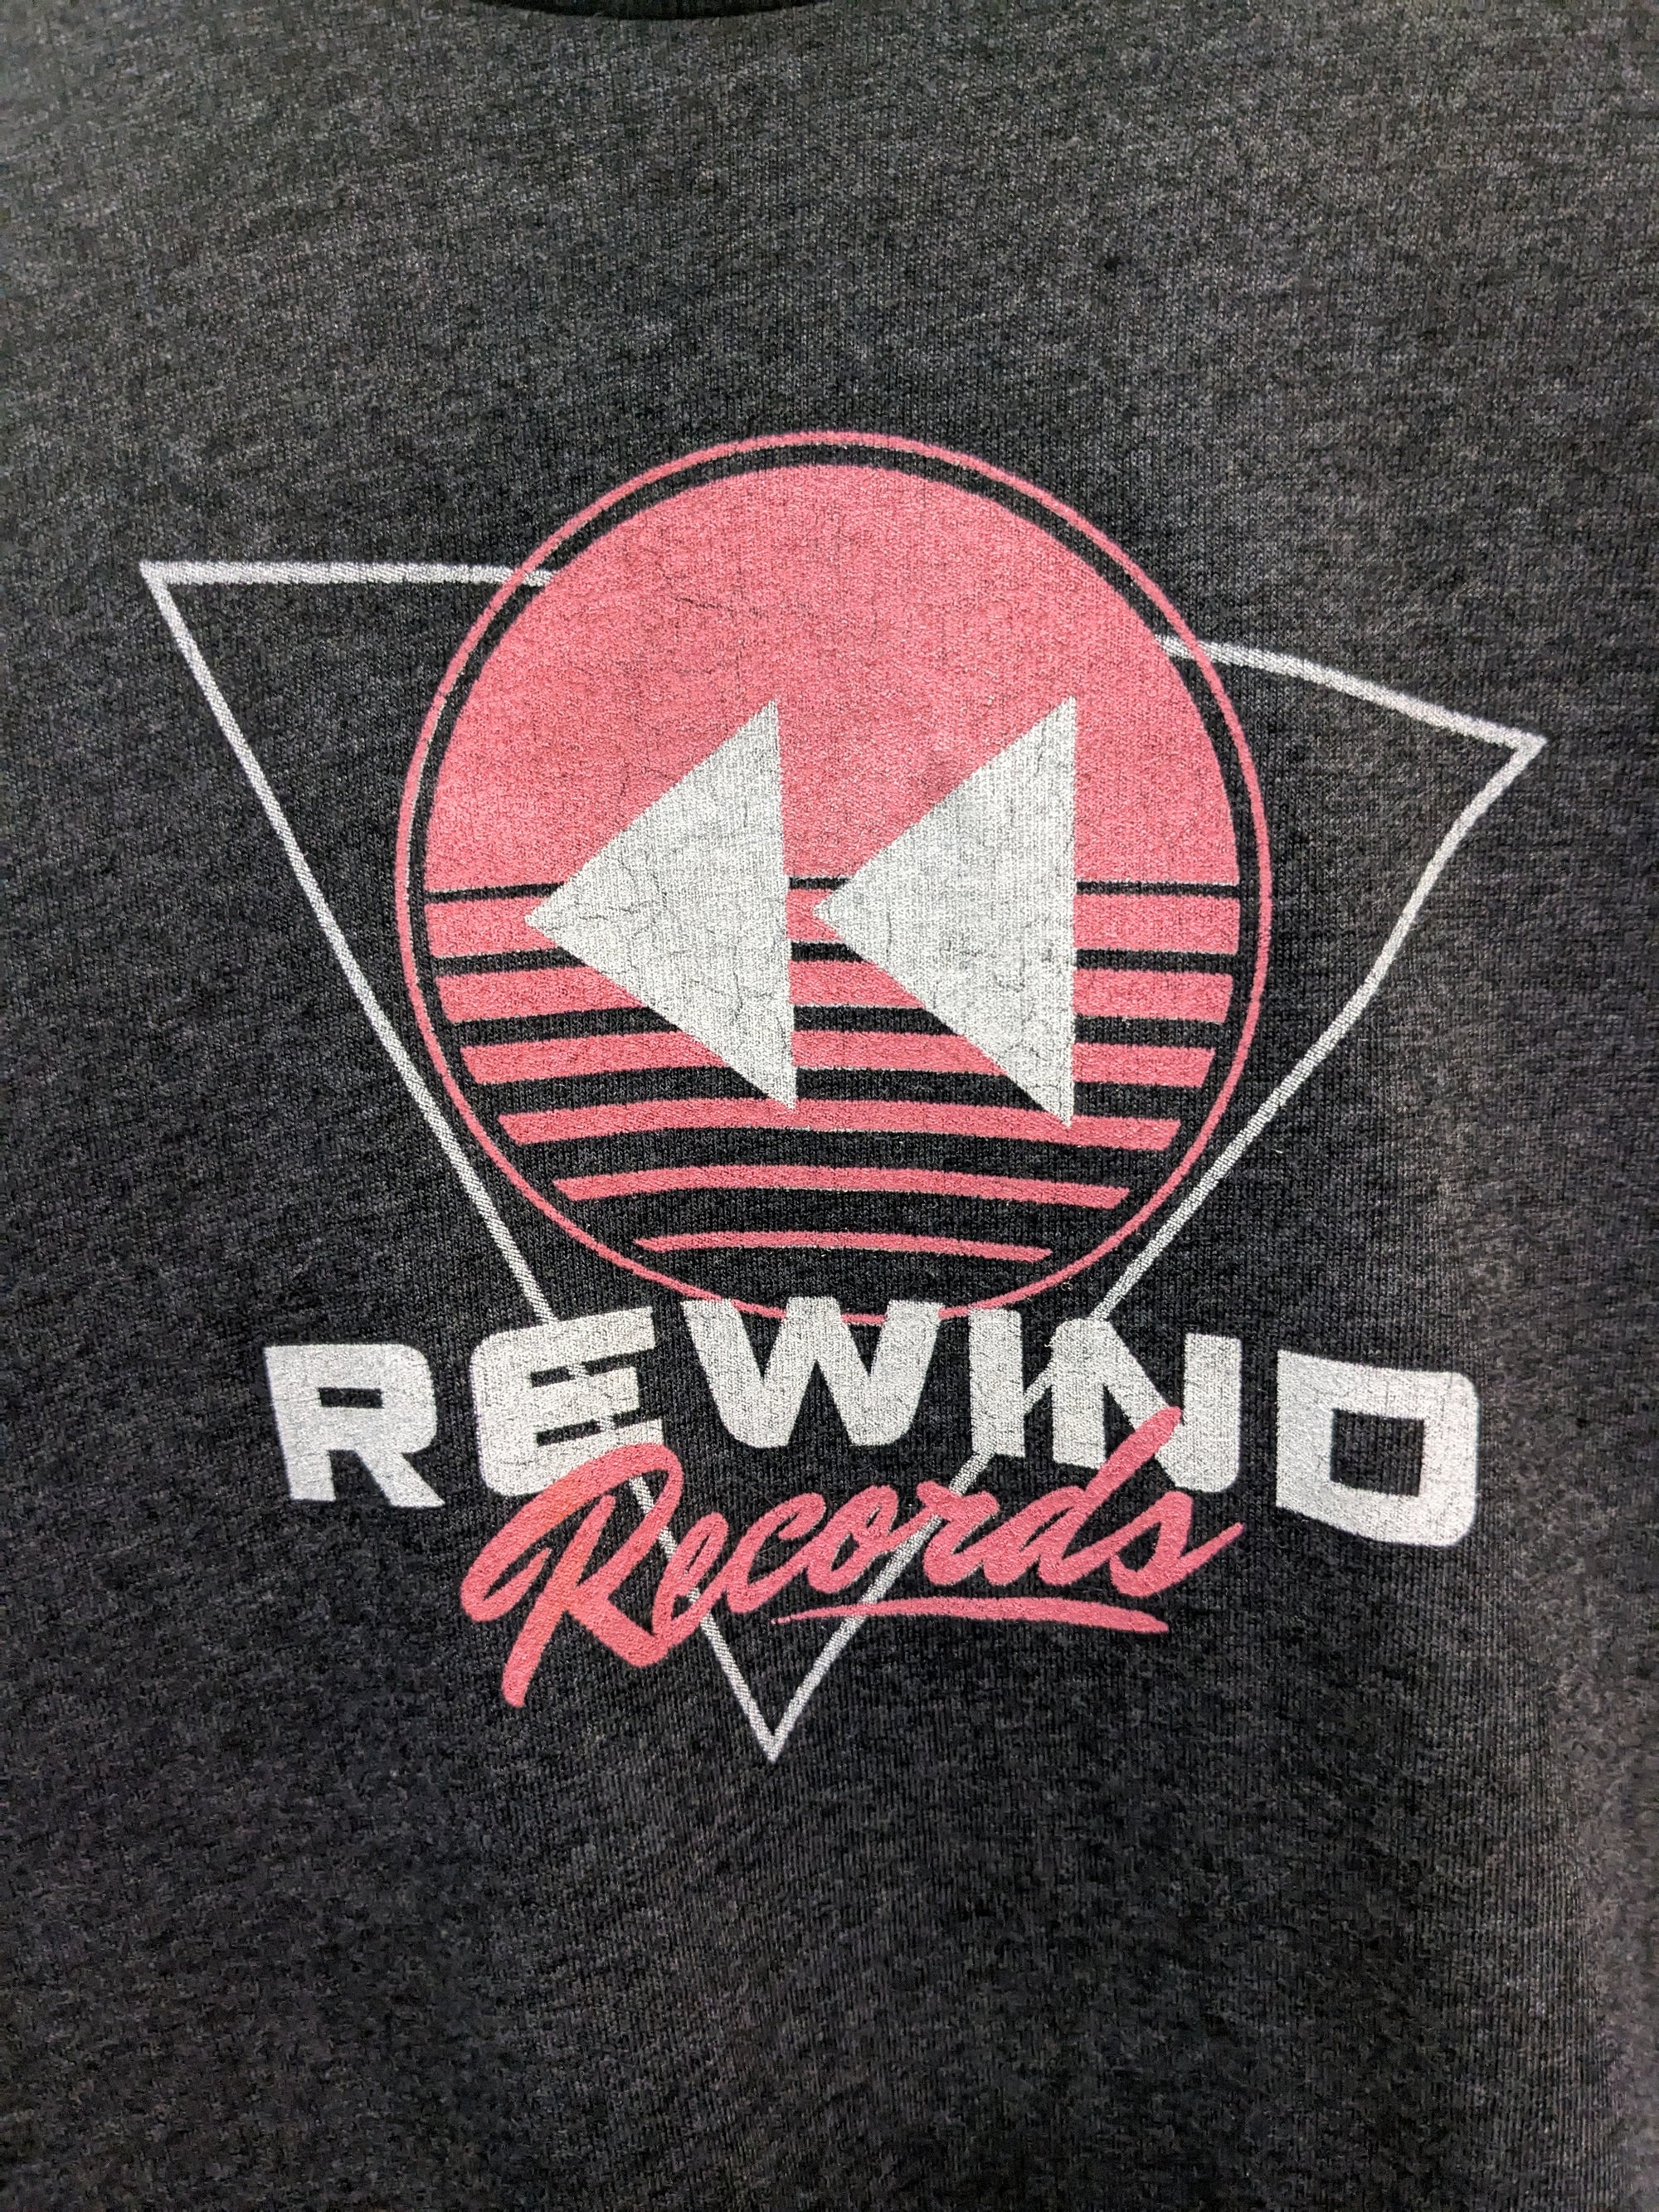 Rewind Records - XL